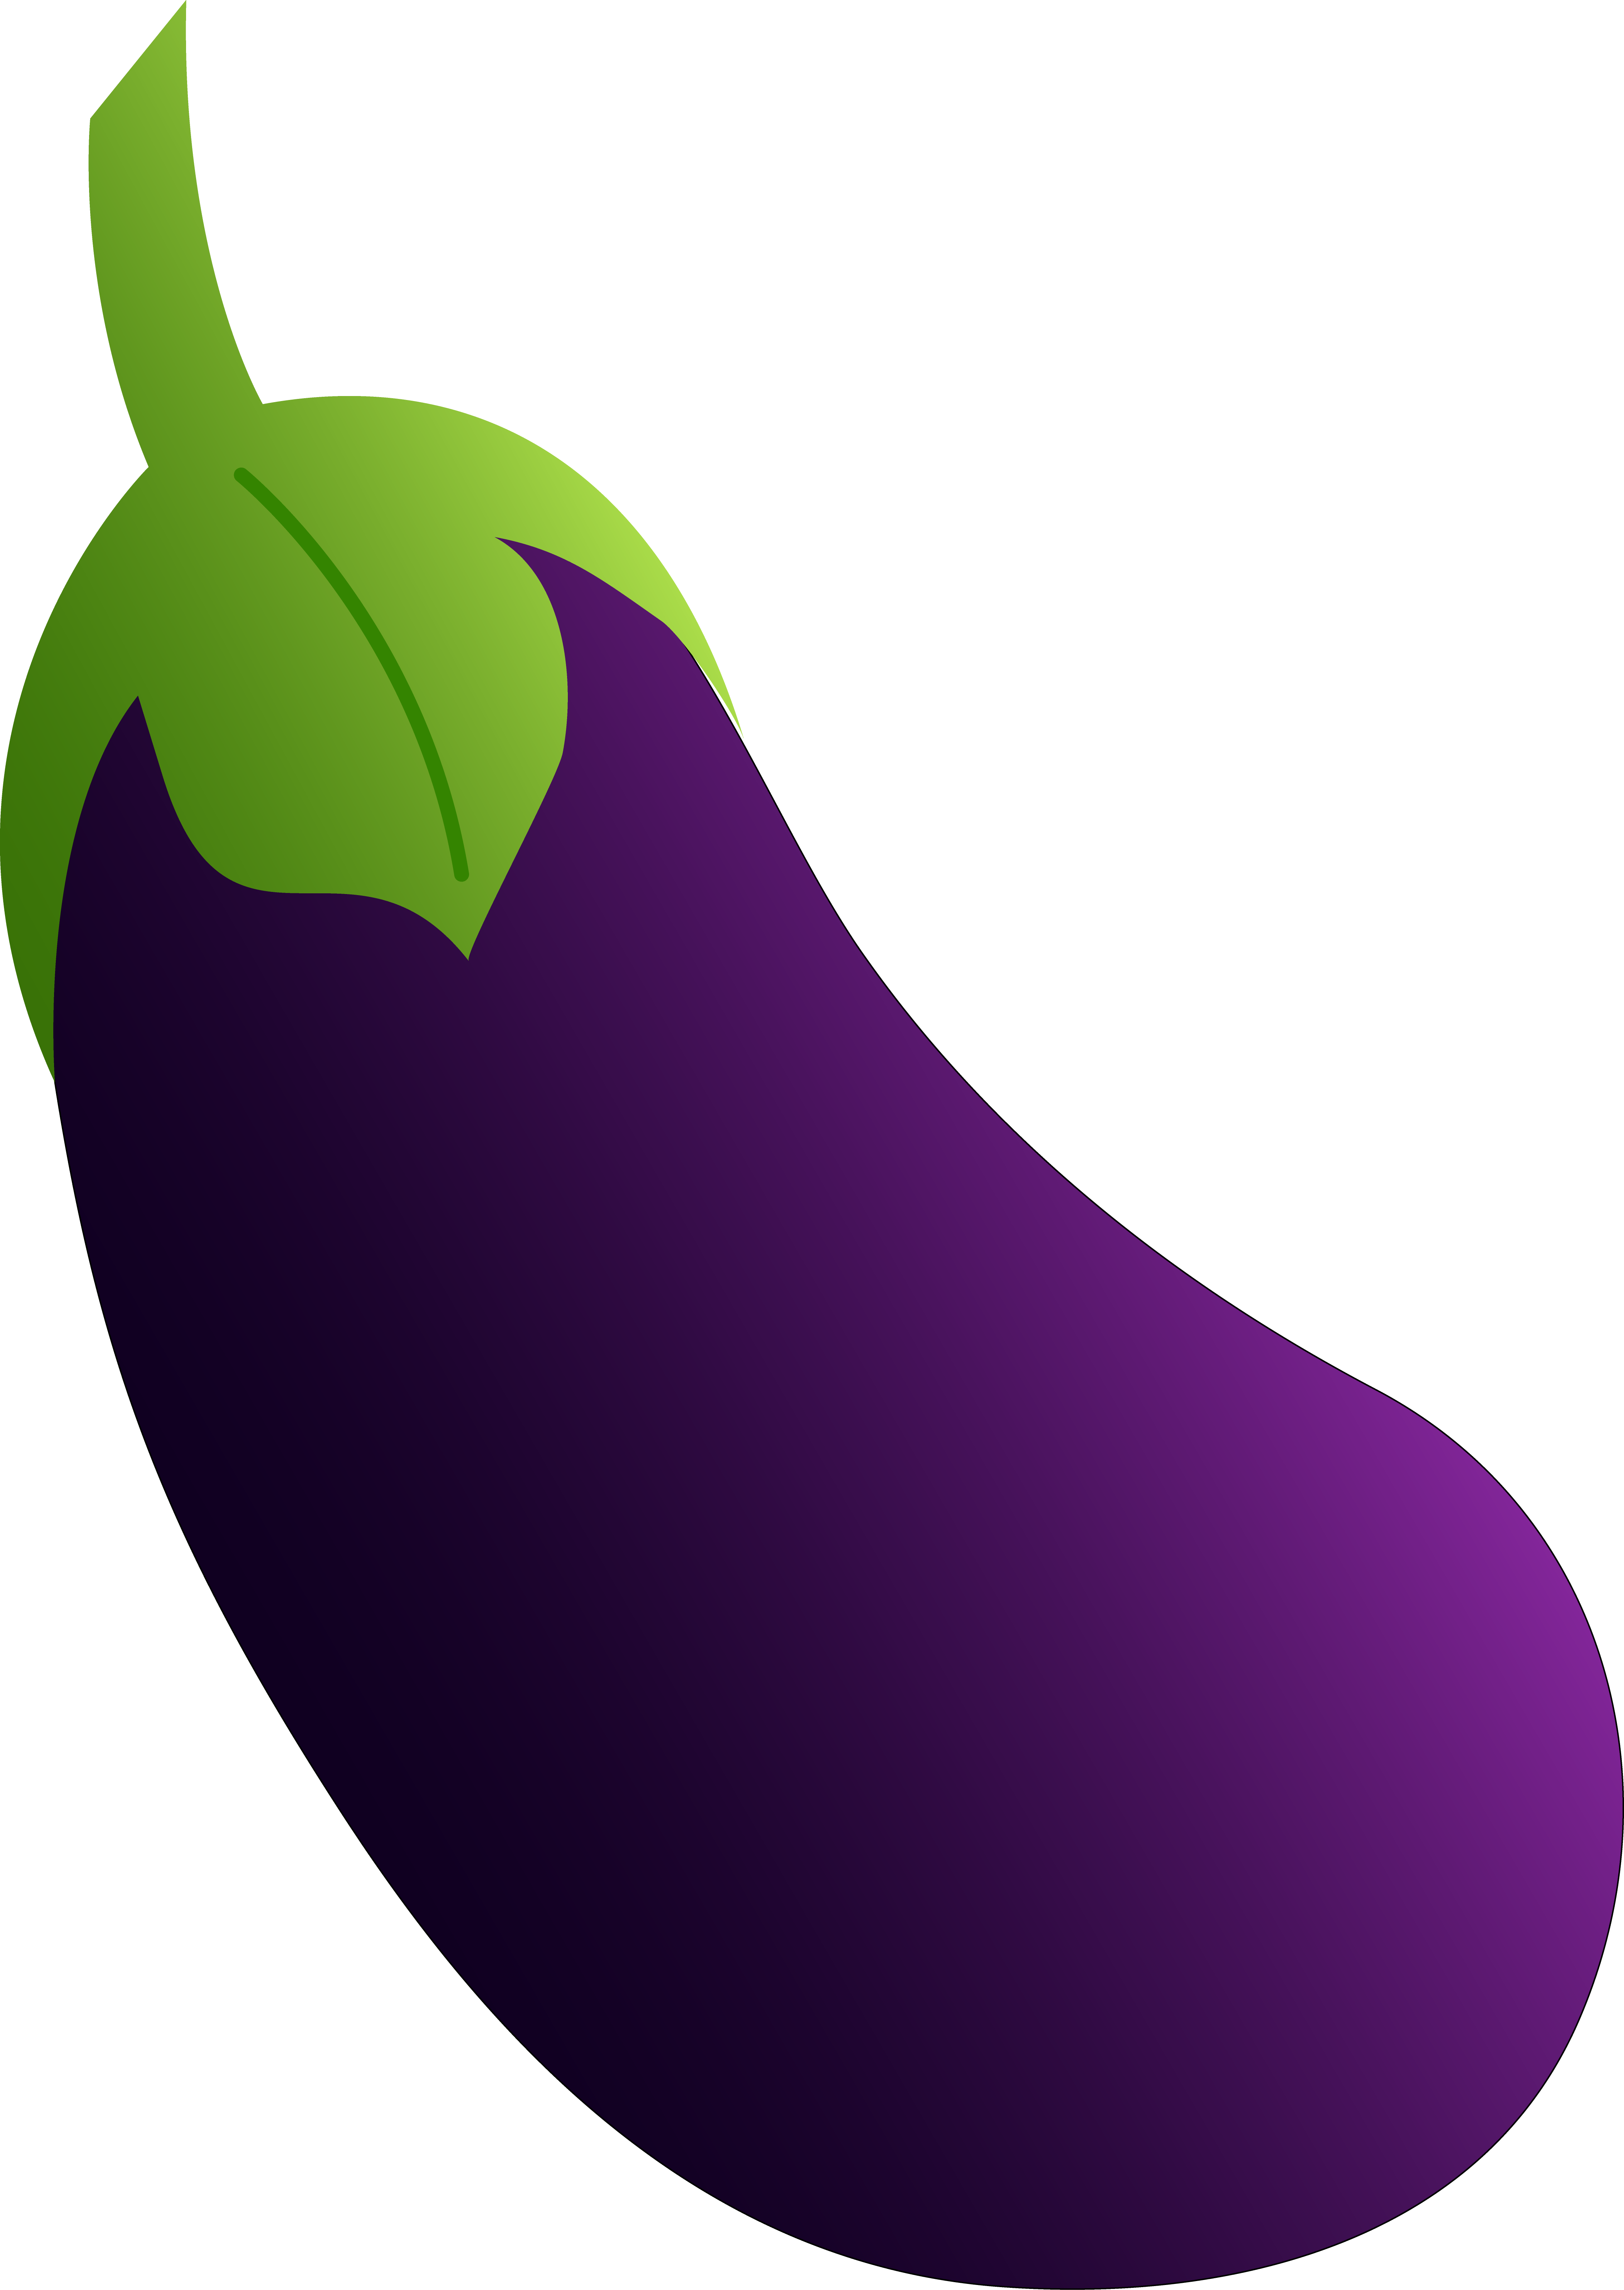 Fruit clipart silhouette. Vegetable free clip art